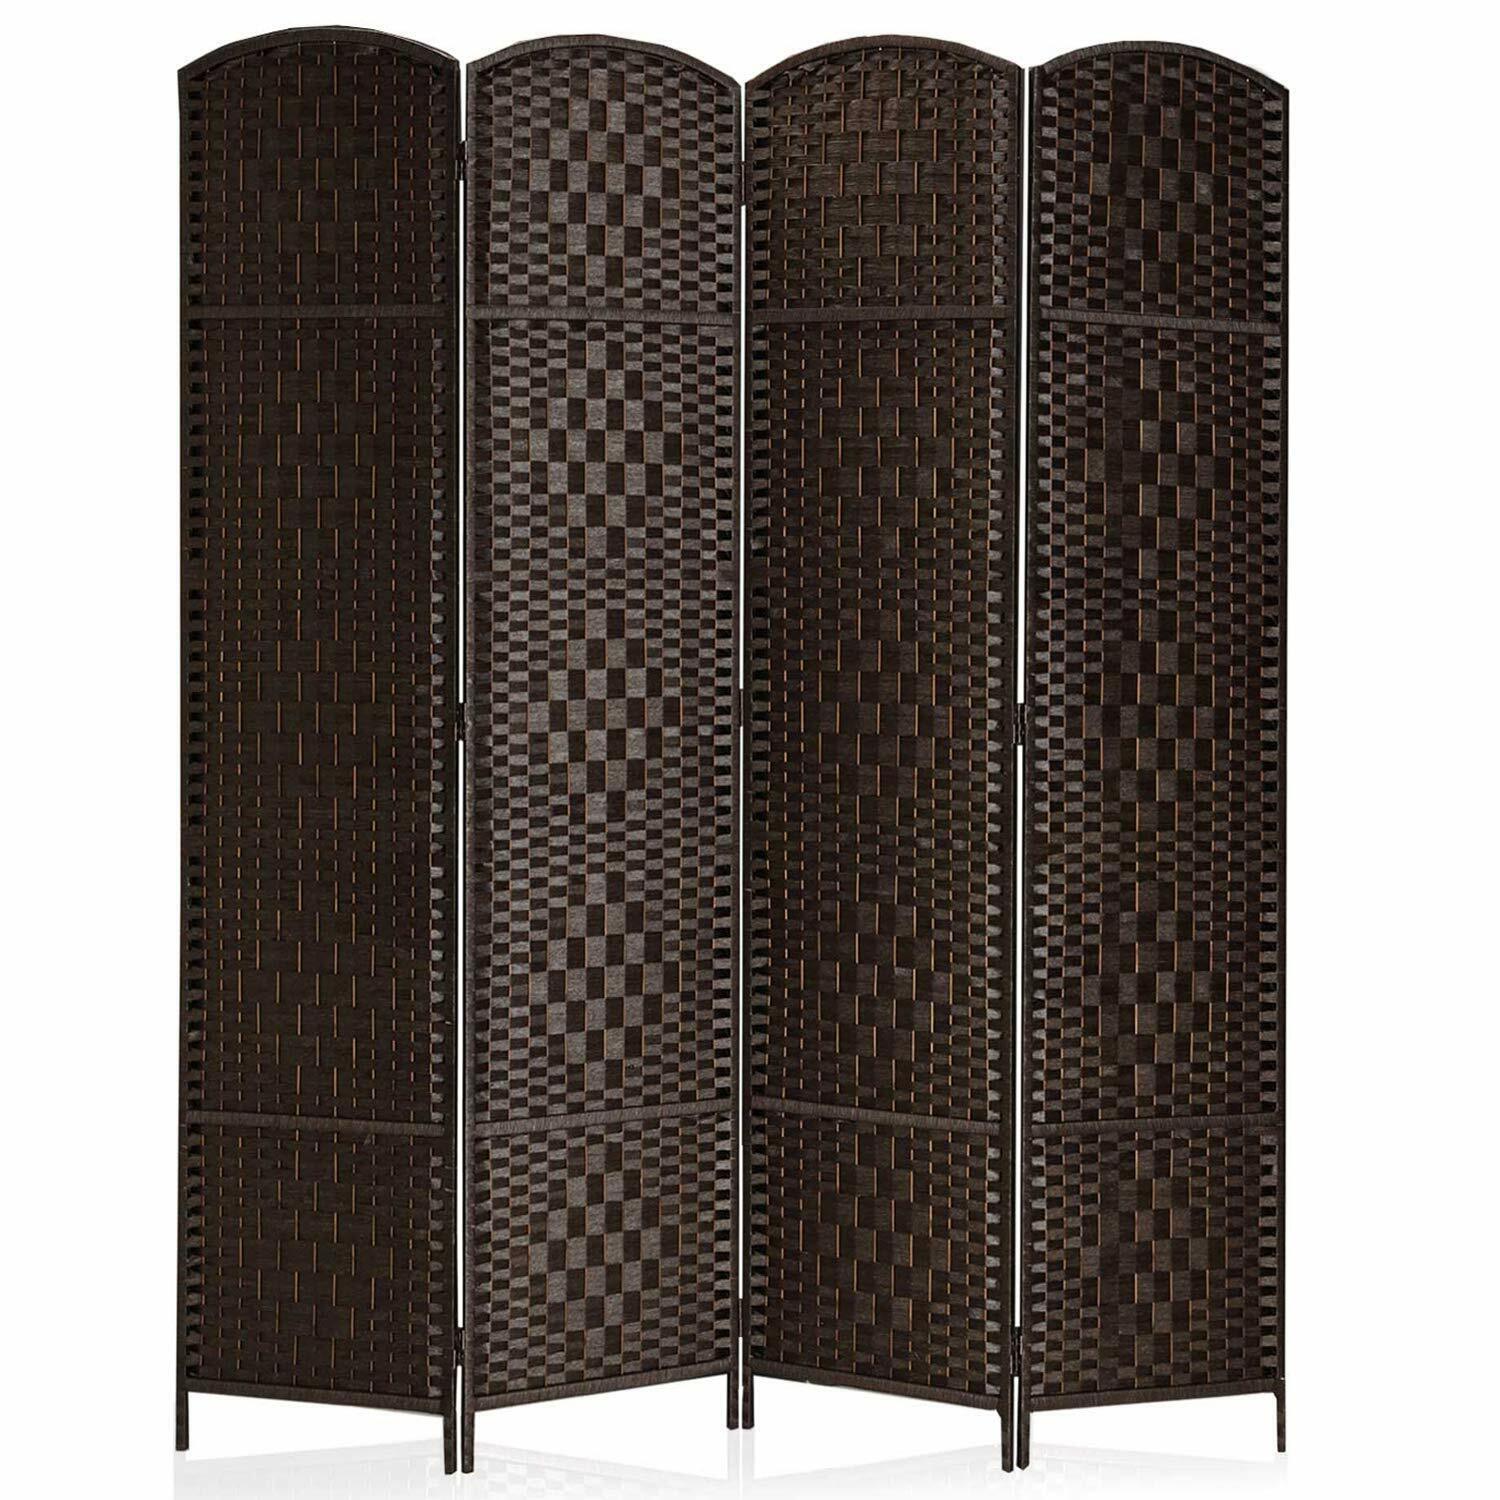 6ft Tall Folding Freestanding Privacy Screen 4-Panel Weave Fiber Room Divider for Living Room Bedroom Dining Room